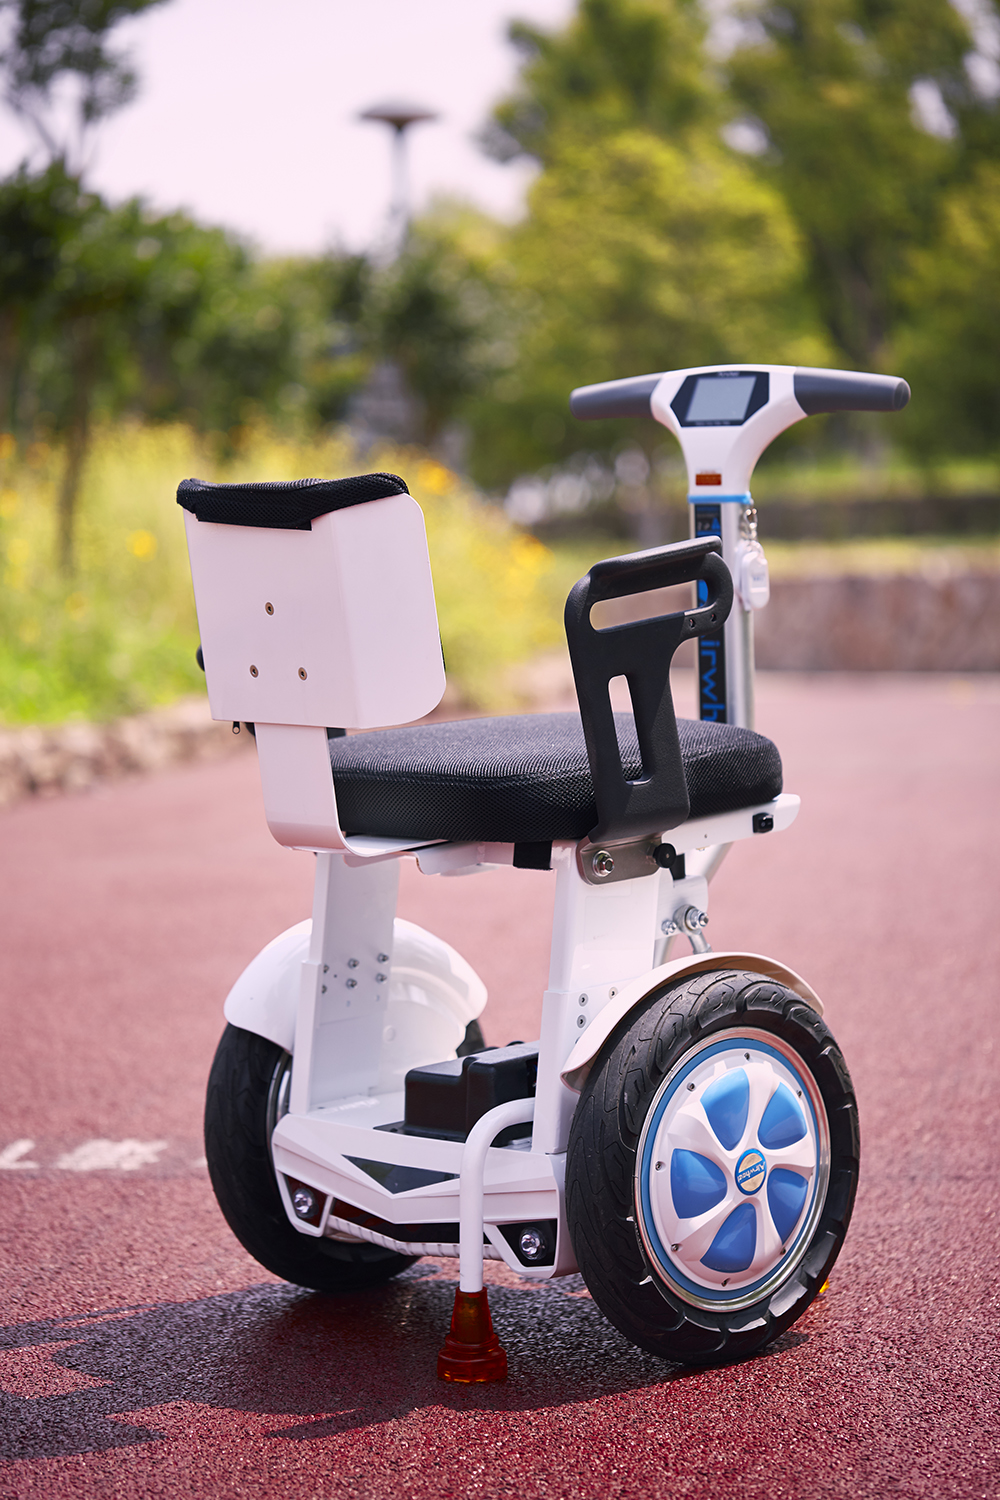 Airwheel A6T intelligent self-balancing wheelchair